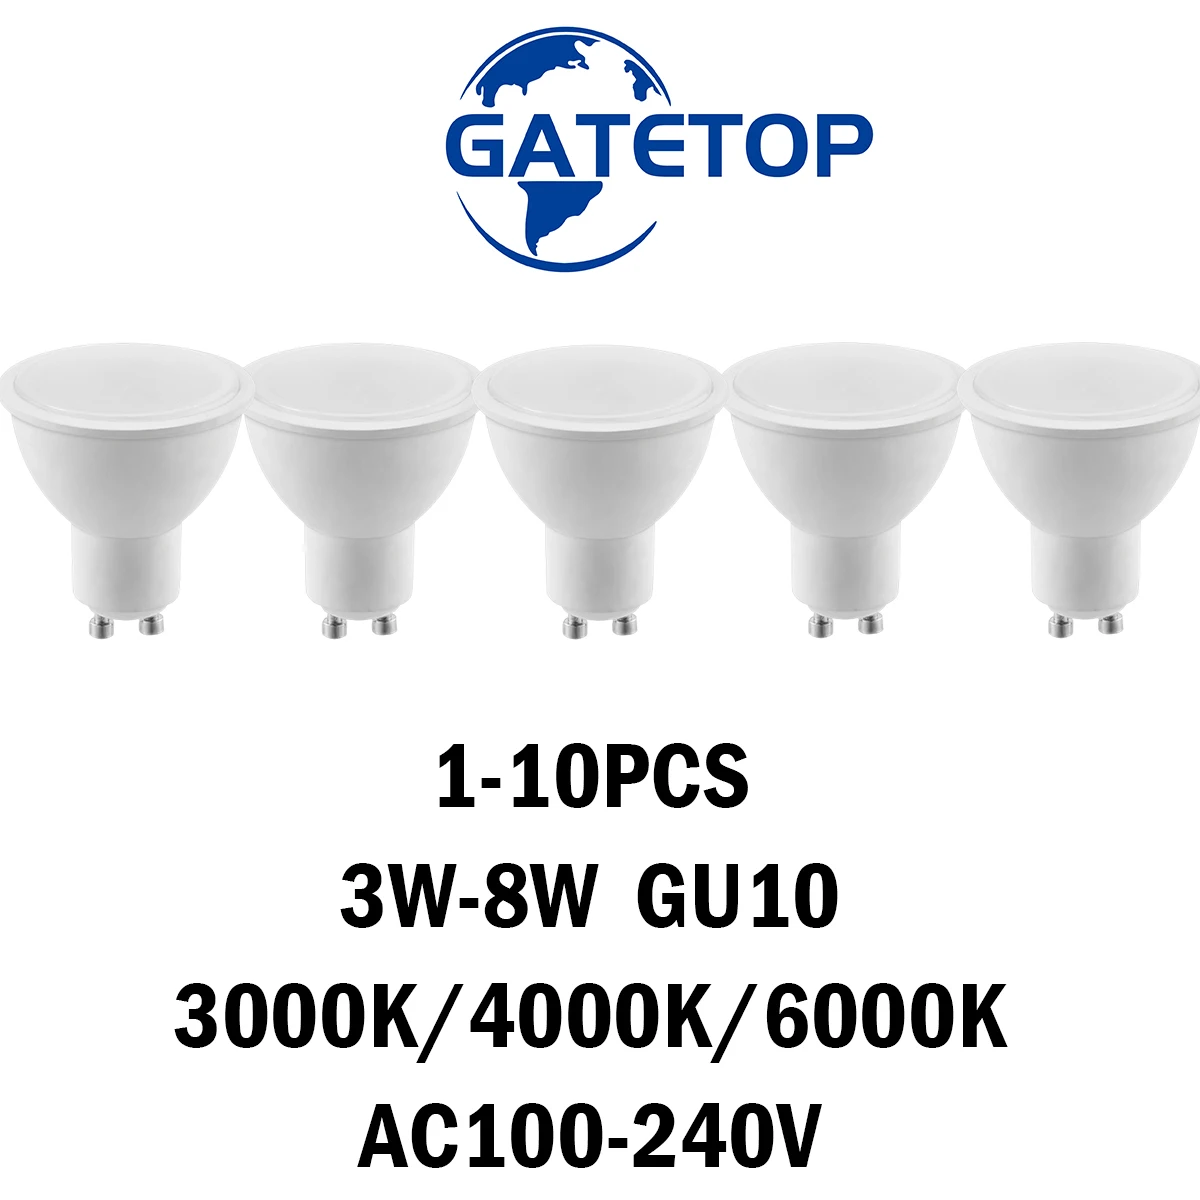 

LED Spotlight GU10 1-10PCS AC110V/220V No Strobe Warm White Light 3W-8W EU CE Certification Lamp for Bedroom,Living room,Kitchen